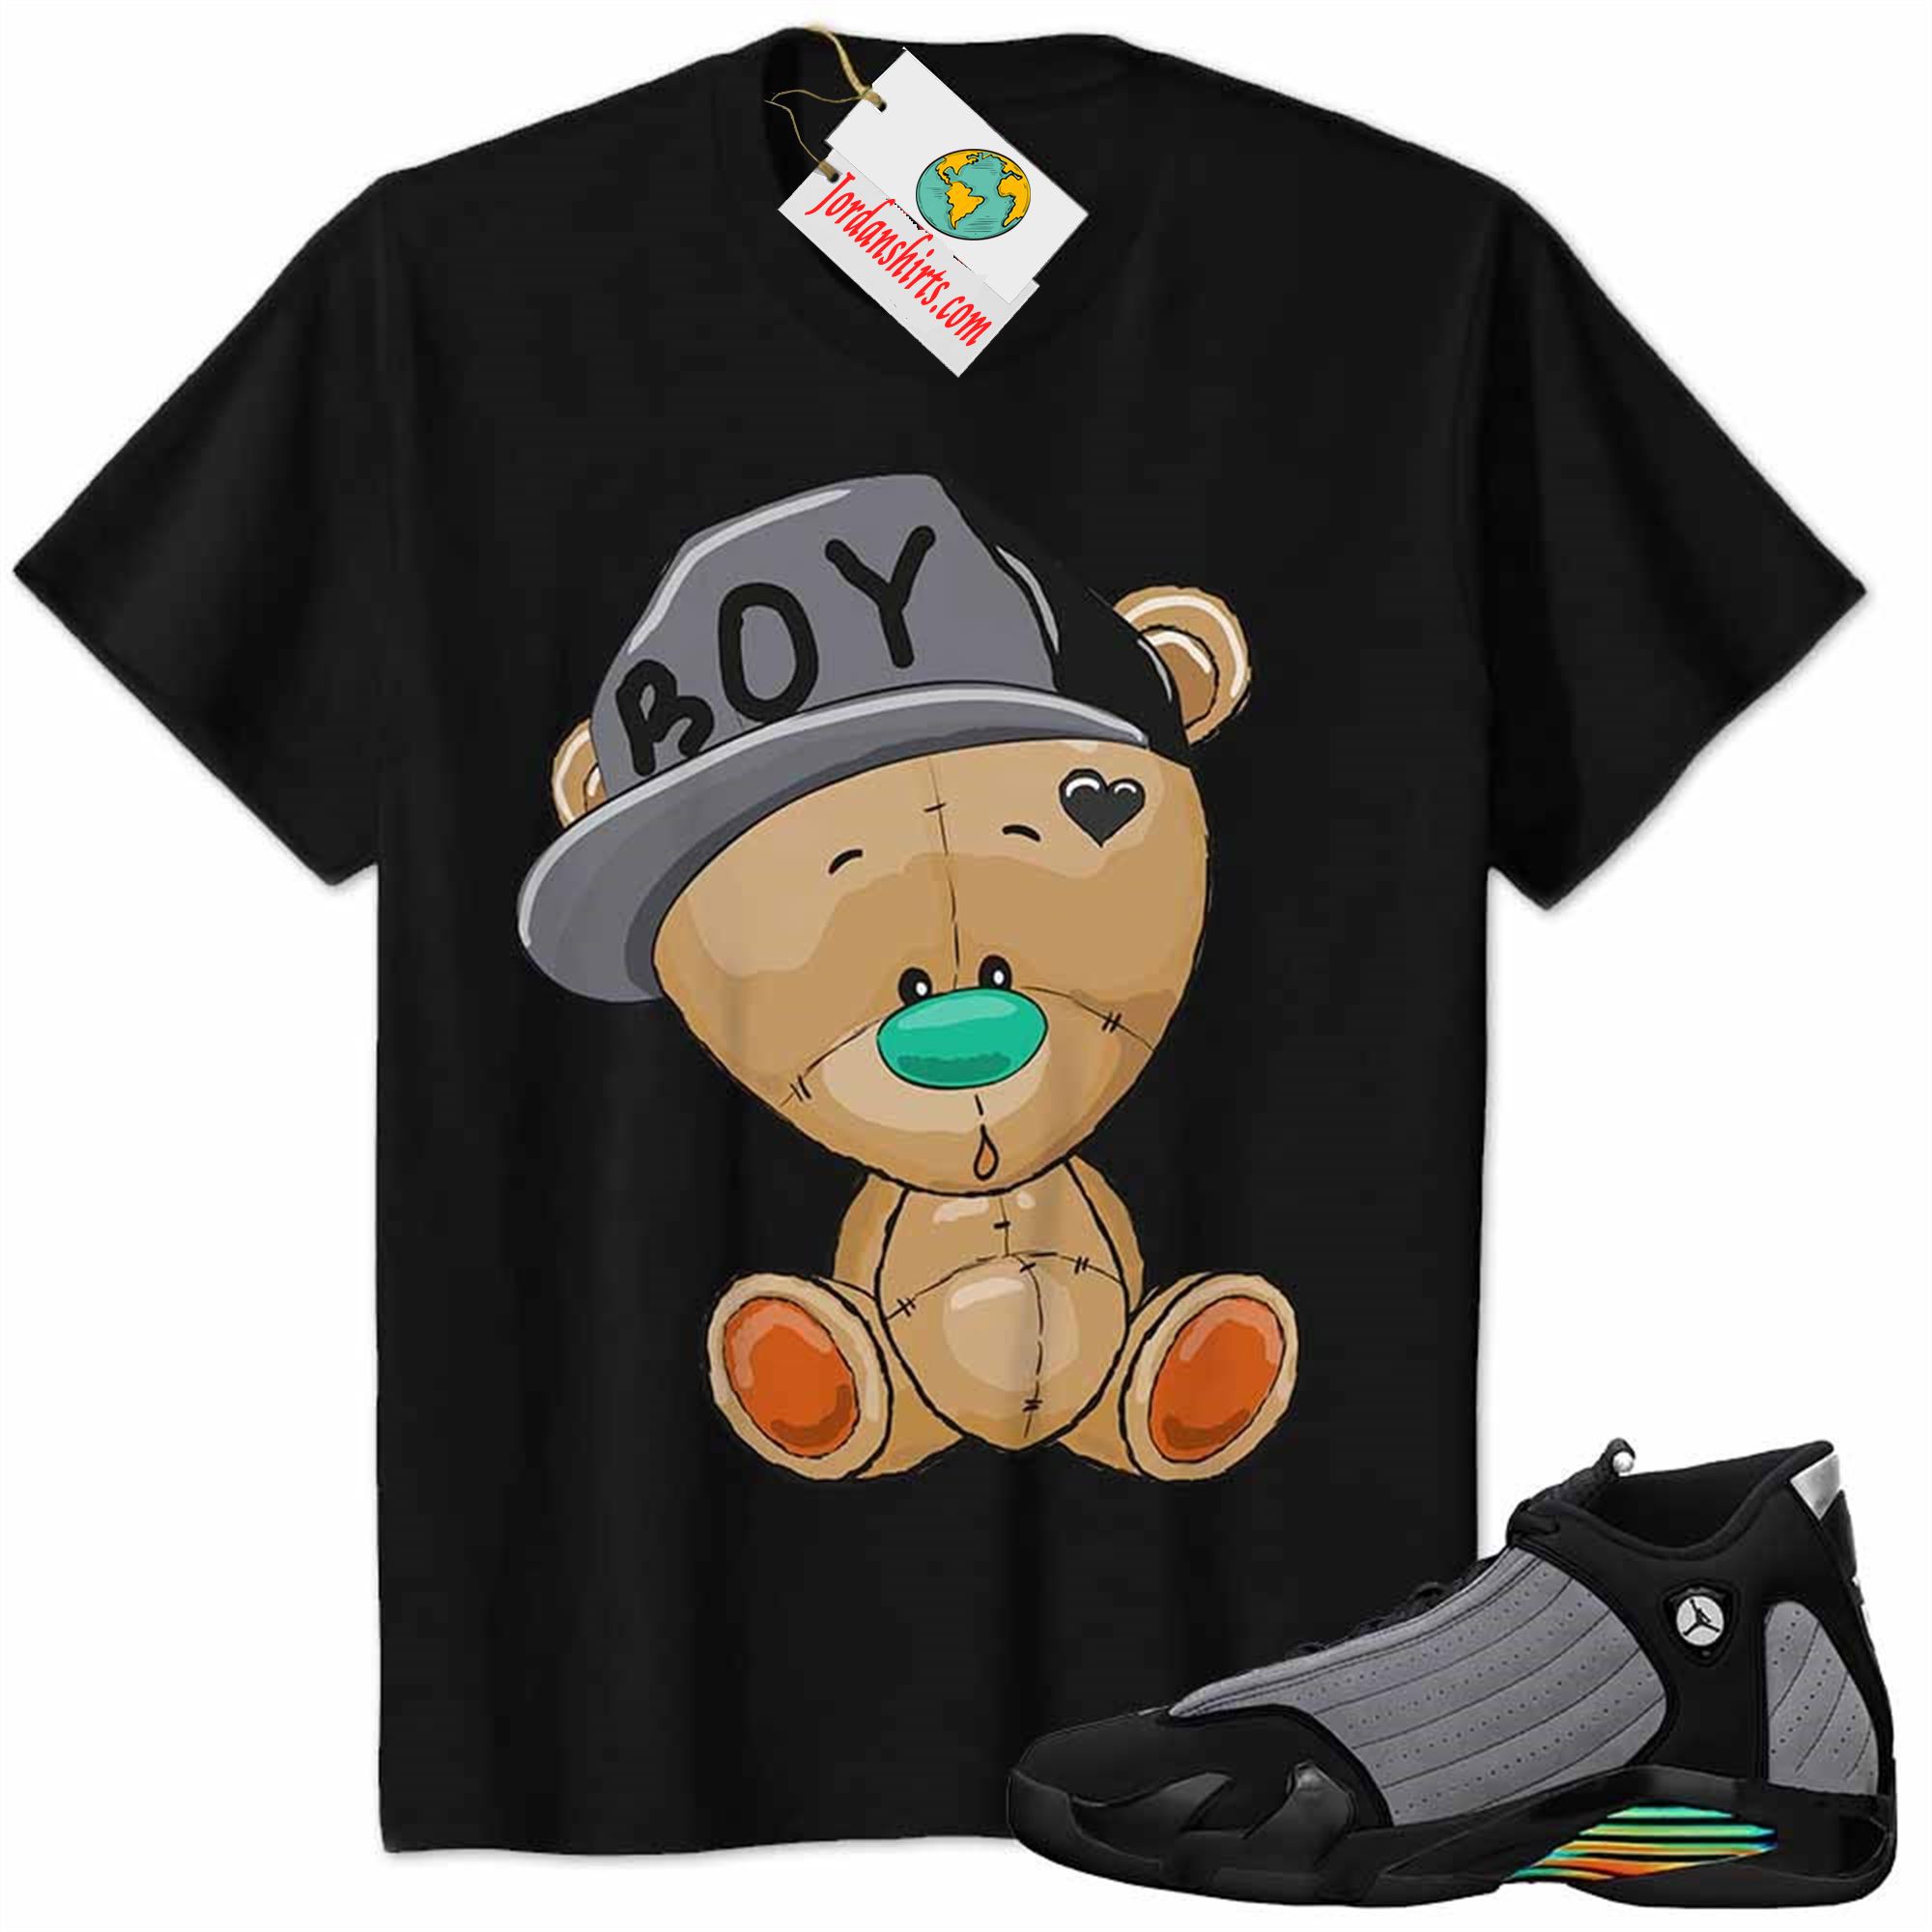 Jordan 14 Shirt, Jordan 14 Particle Grey Shirt Cute Baby Teddy Bear Black Full Size Up To 5xl